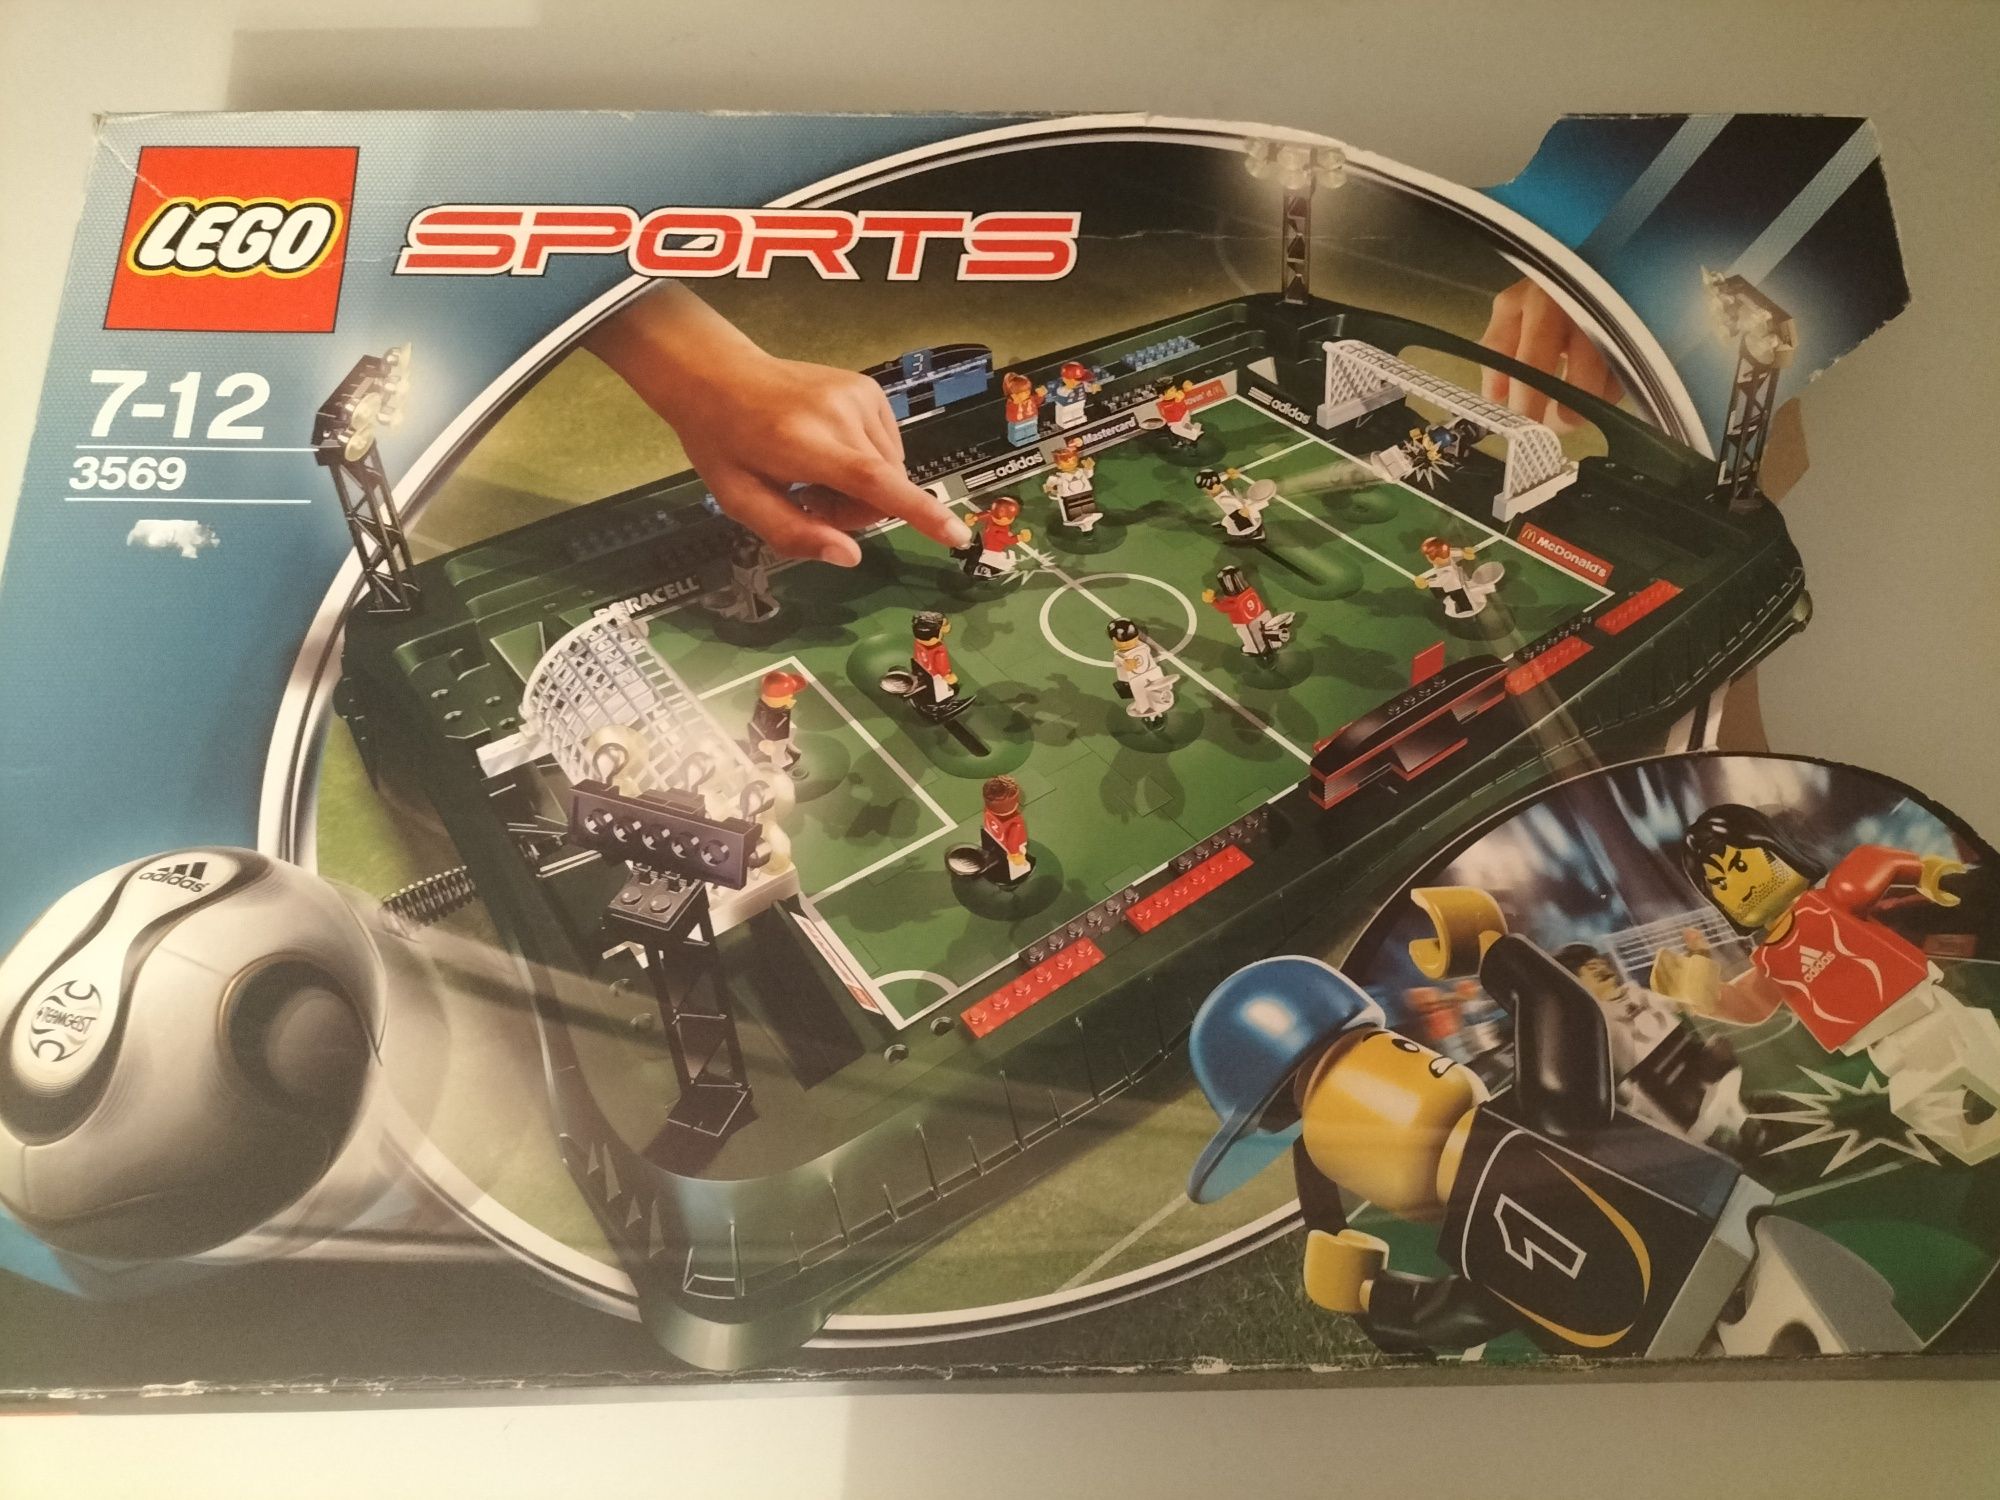 LEGO Sports Grand Soccer Stadium